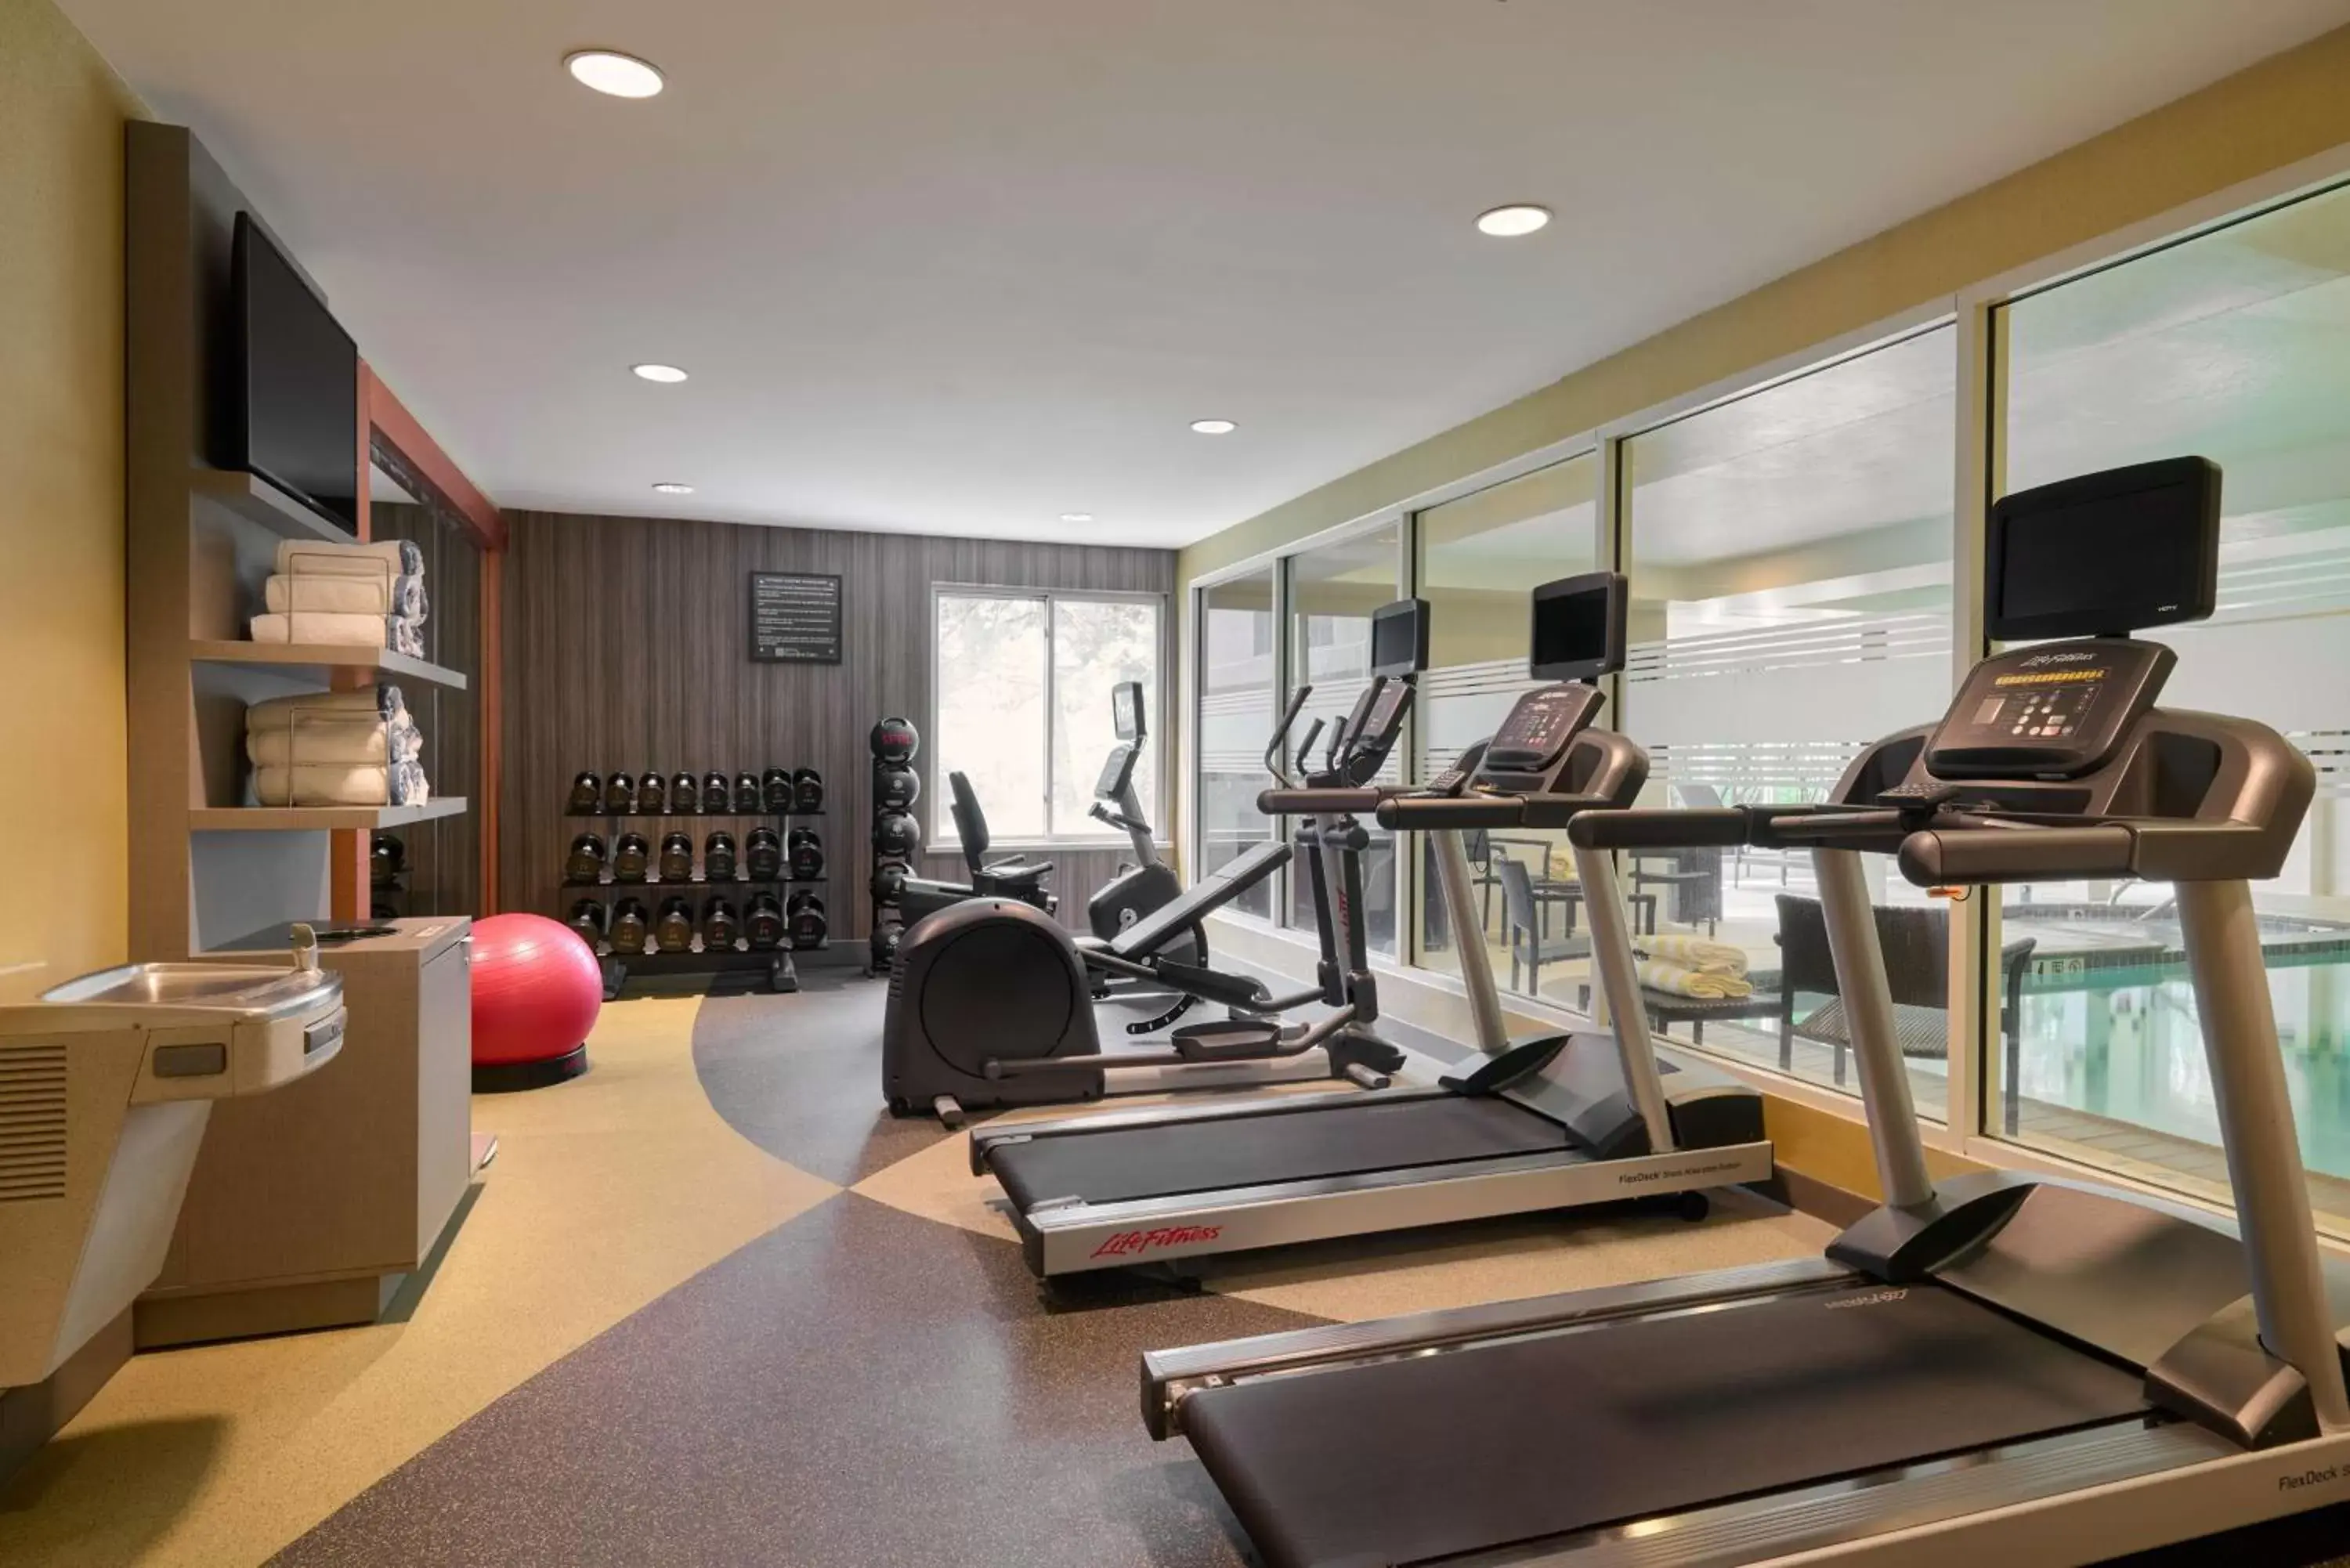 Fitness centre/facilities, Fitness Center/Facilities in Hilton Garden Inn Hershey